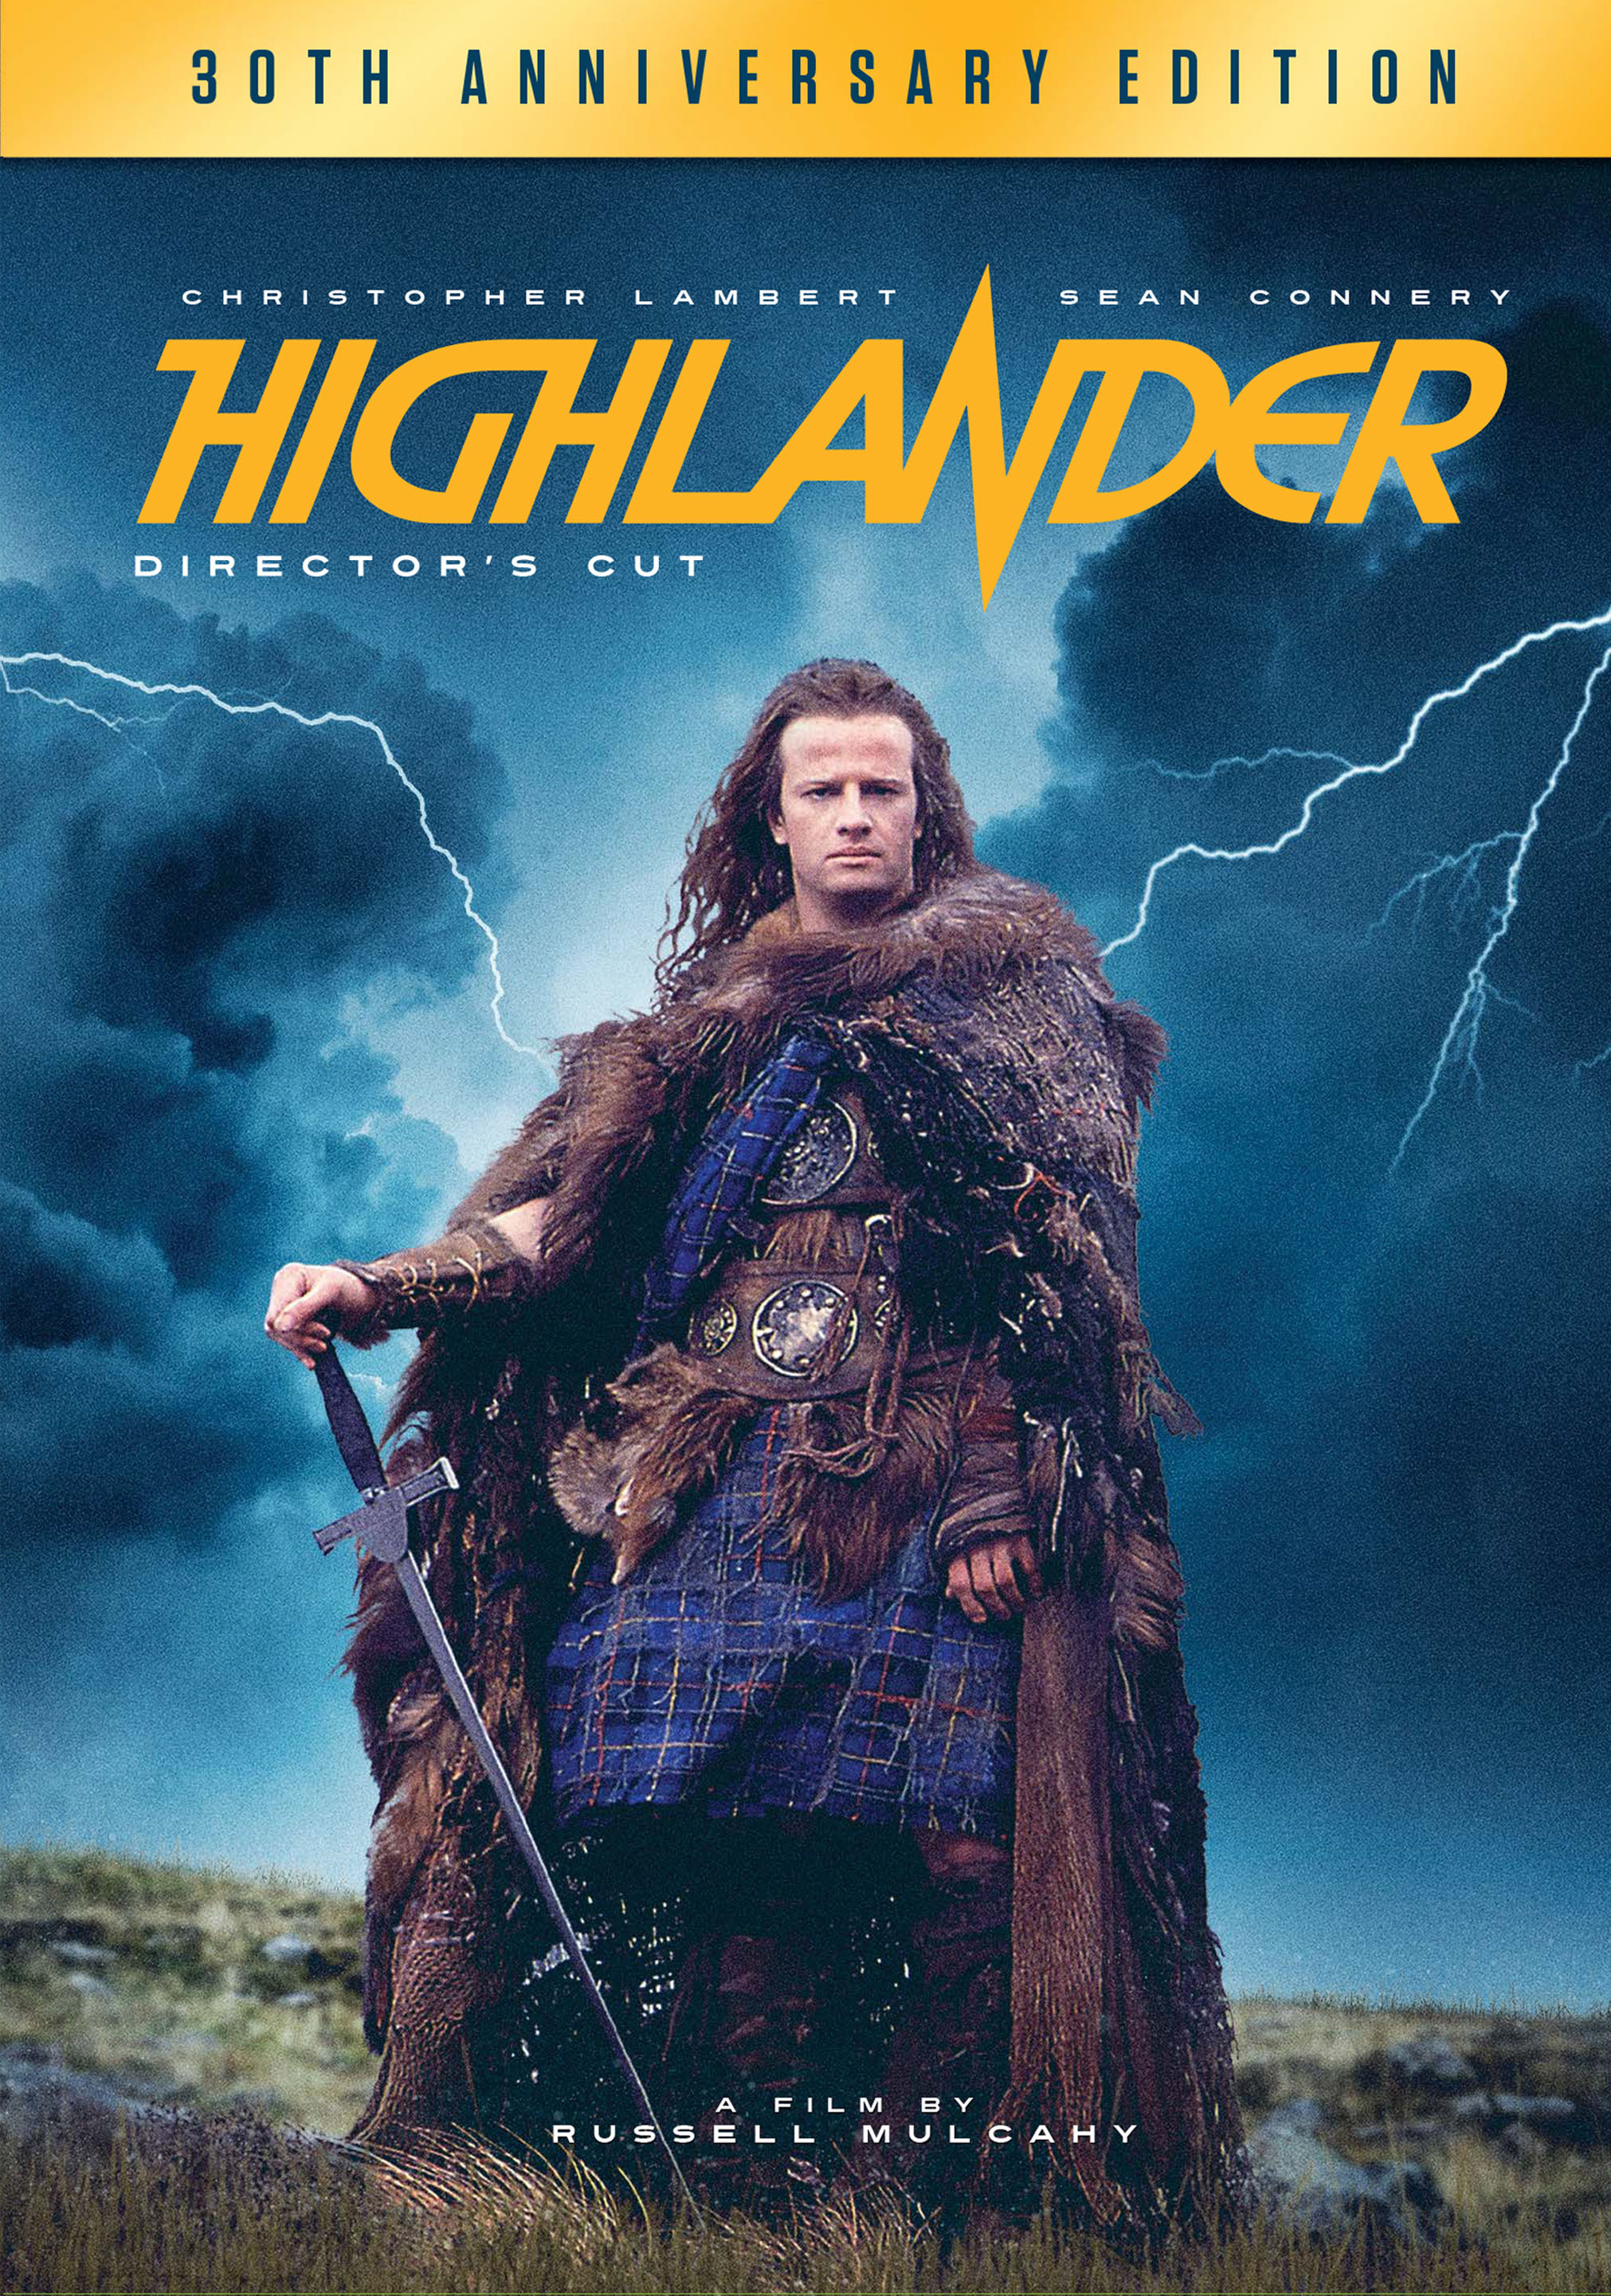 Highlander (30th Anniversary Edition) - DVD [ 1986 ]  - Sci Fi Movies On DVD - Movies On GRUV